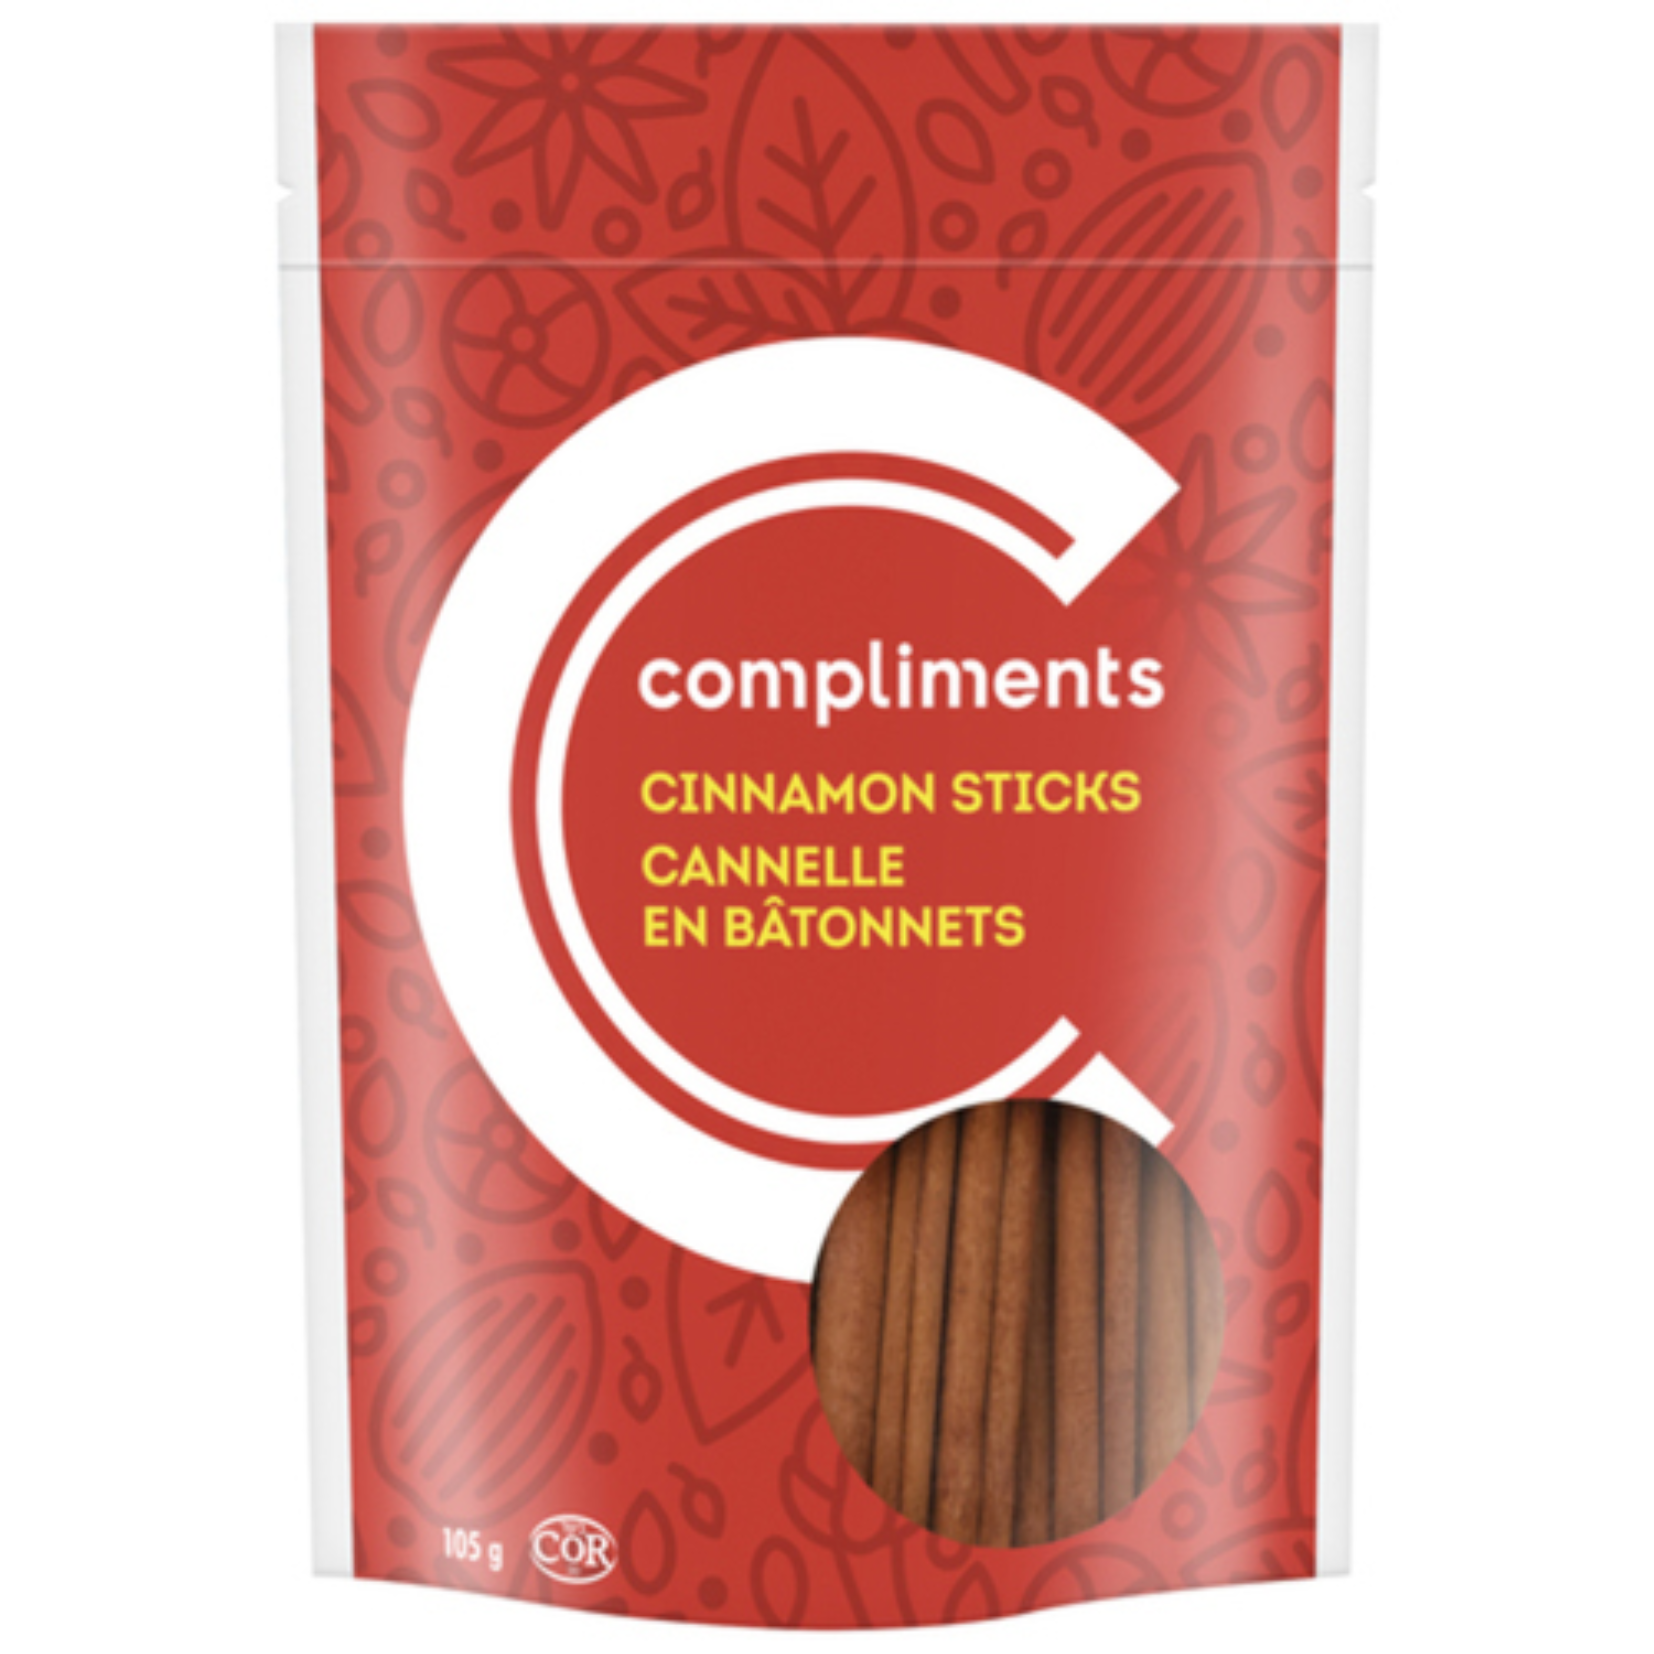 Compliments Cinnamon Sticks 105g